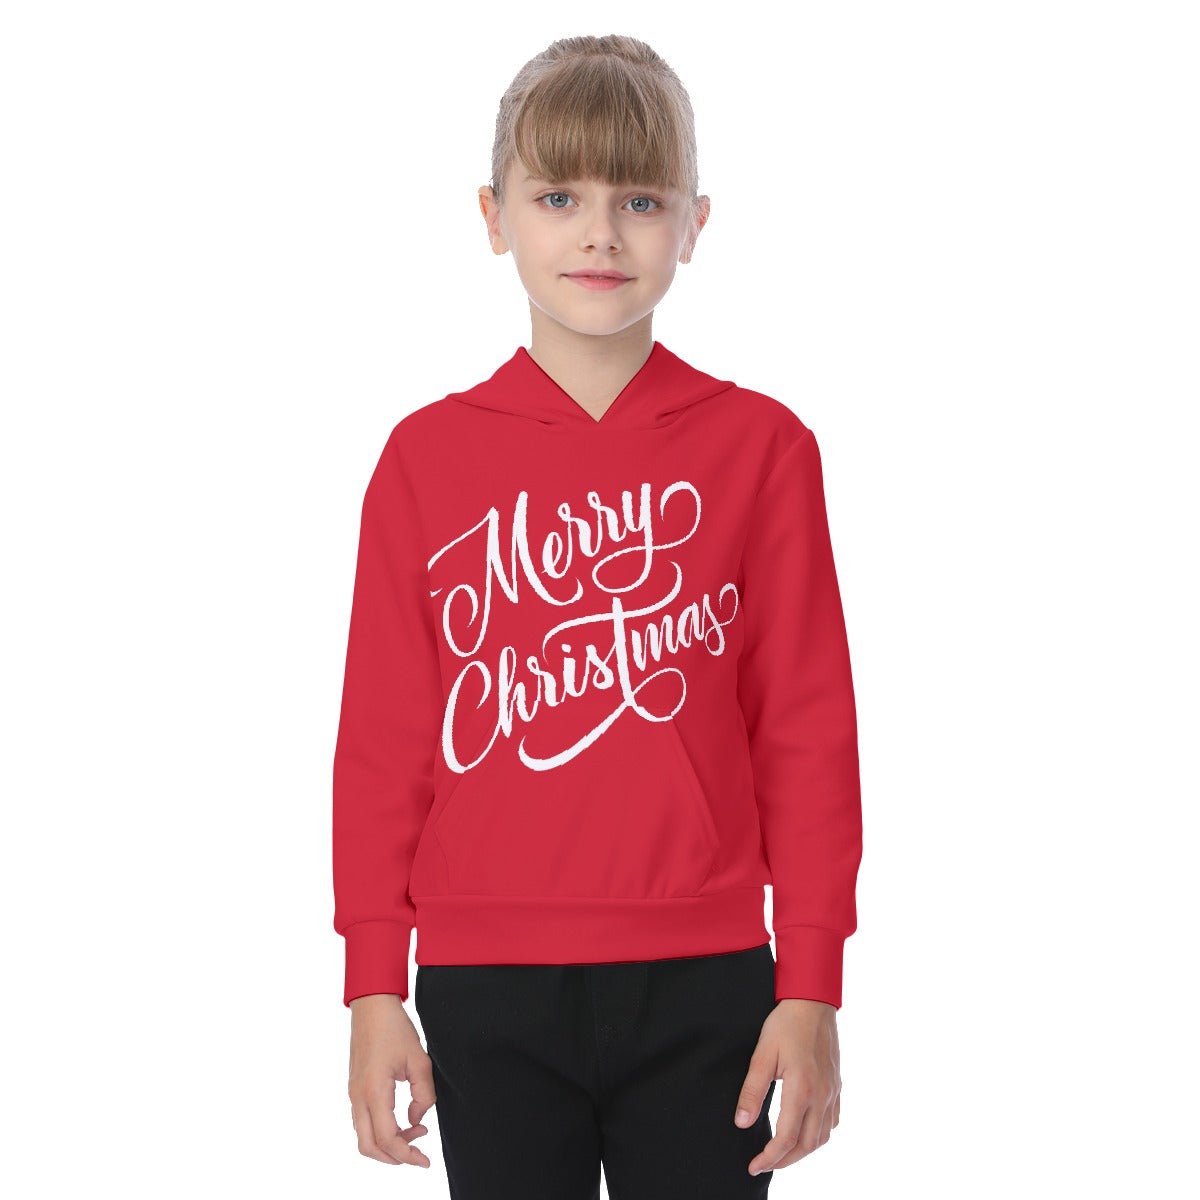 Kid's Fleece Christmas Hoodie - Merry Christmas - Red - Festive Style